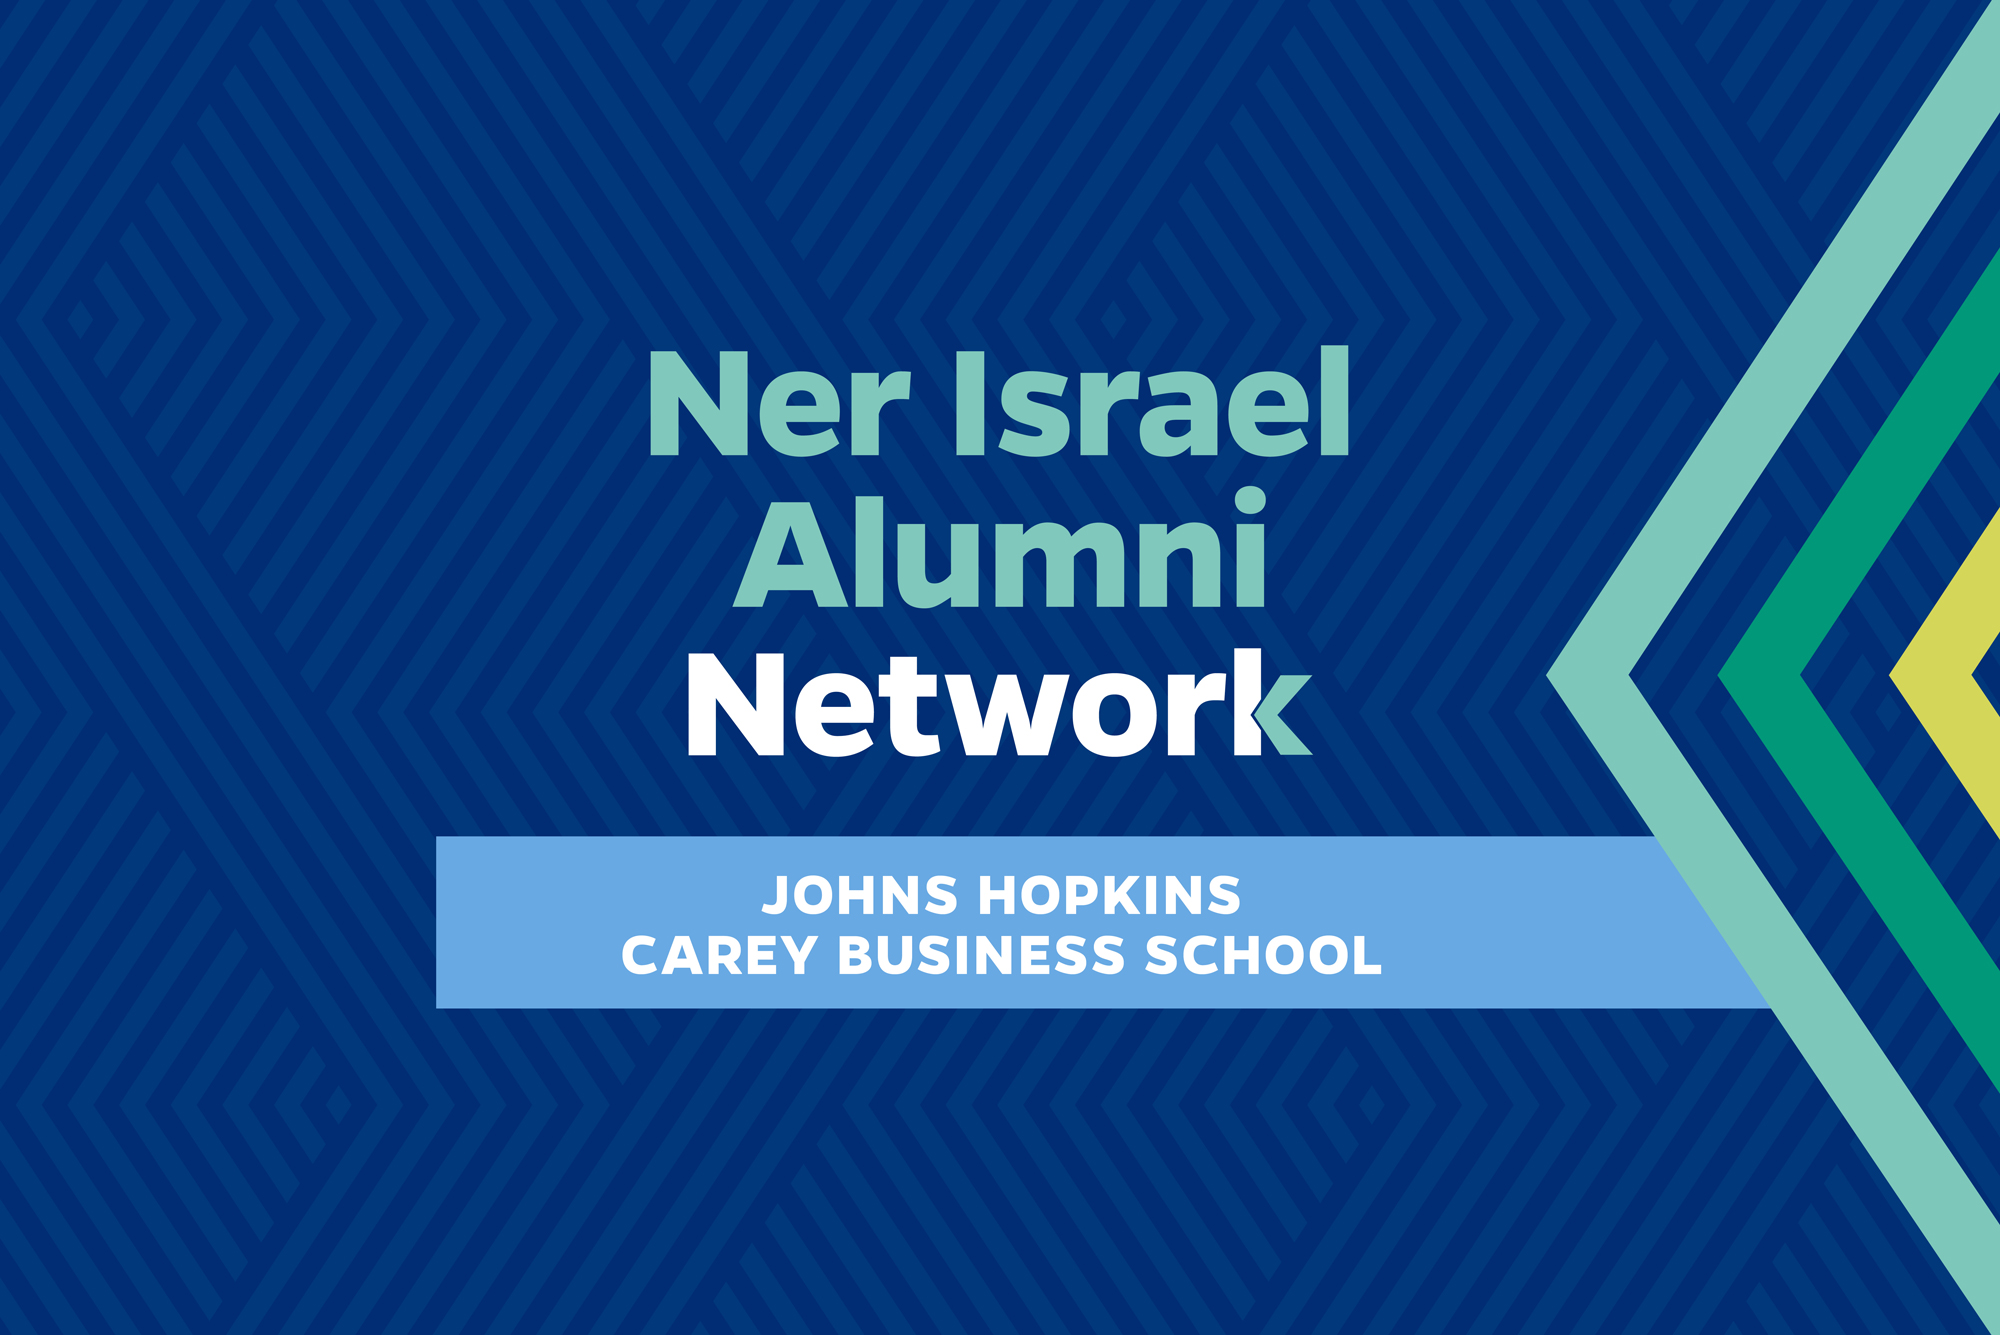 Carey Business School Ner Israel Partnership Networking Event